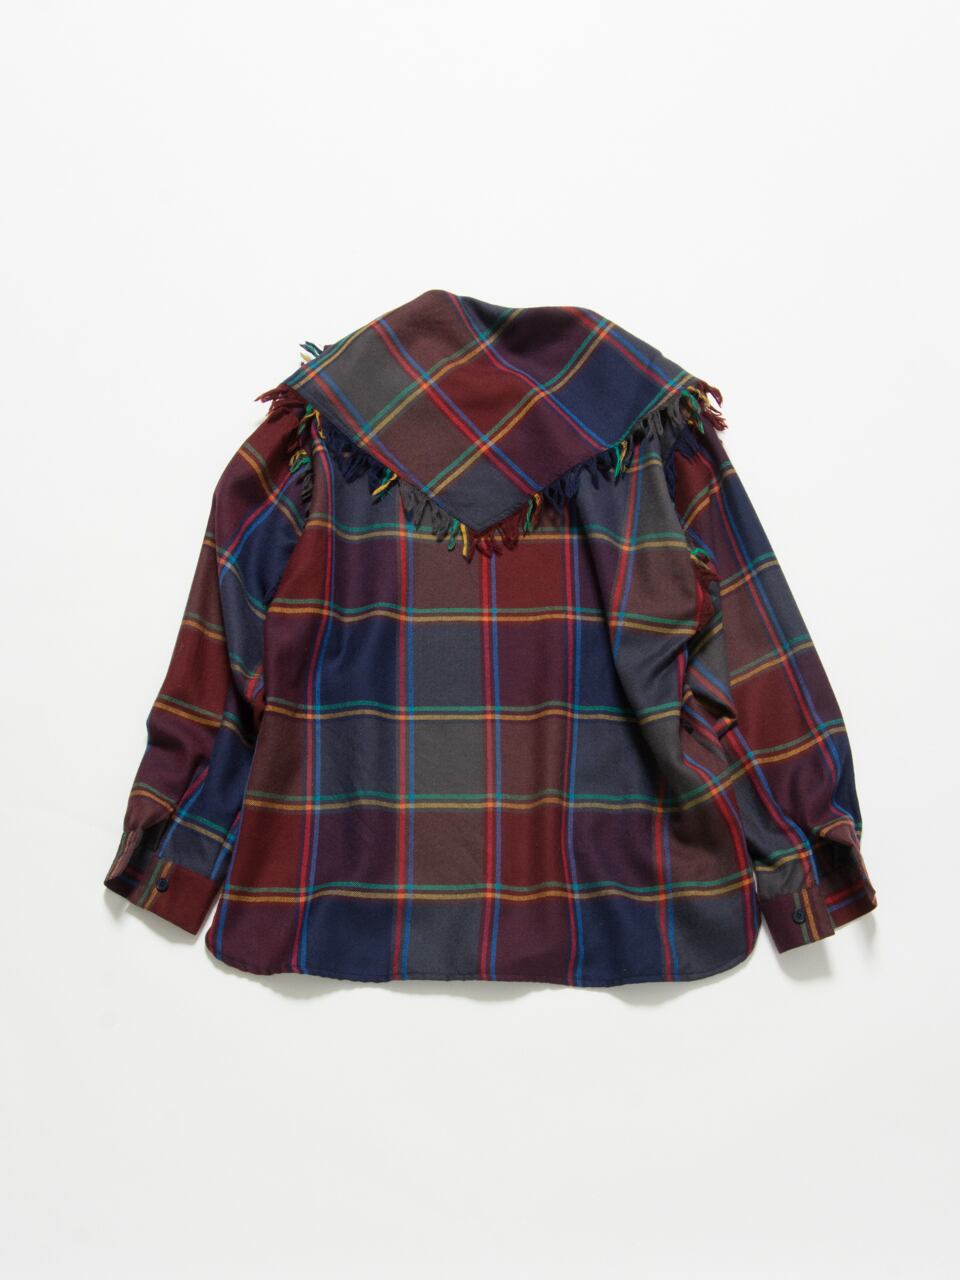 【Guy Laroche】Made in France Pullover design blouse with check patterns（ギラロッシュ フランス製チェック柄プルオーバーデザインブラウス）